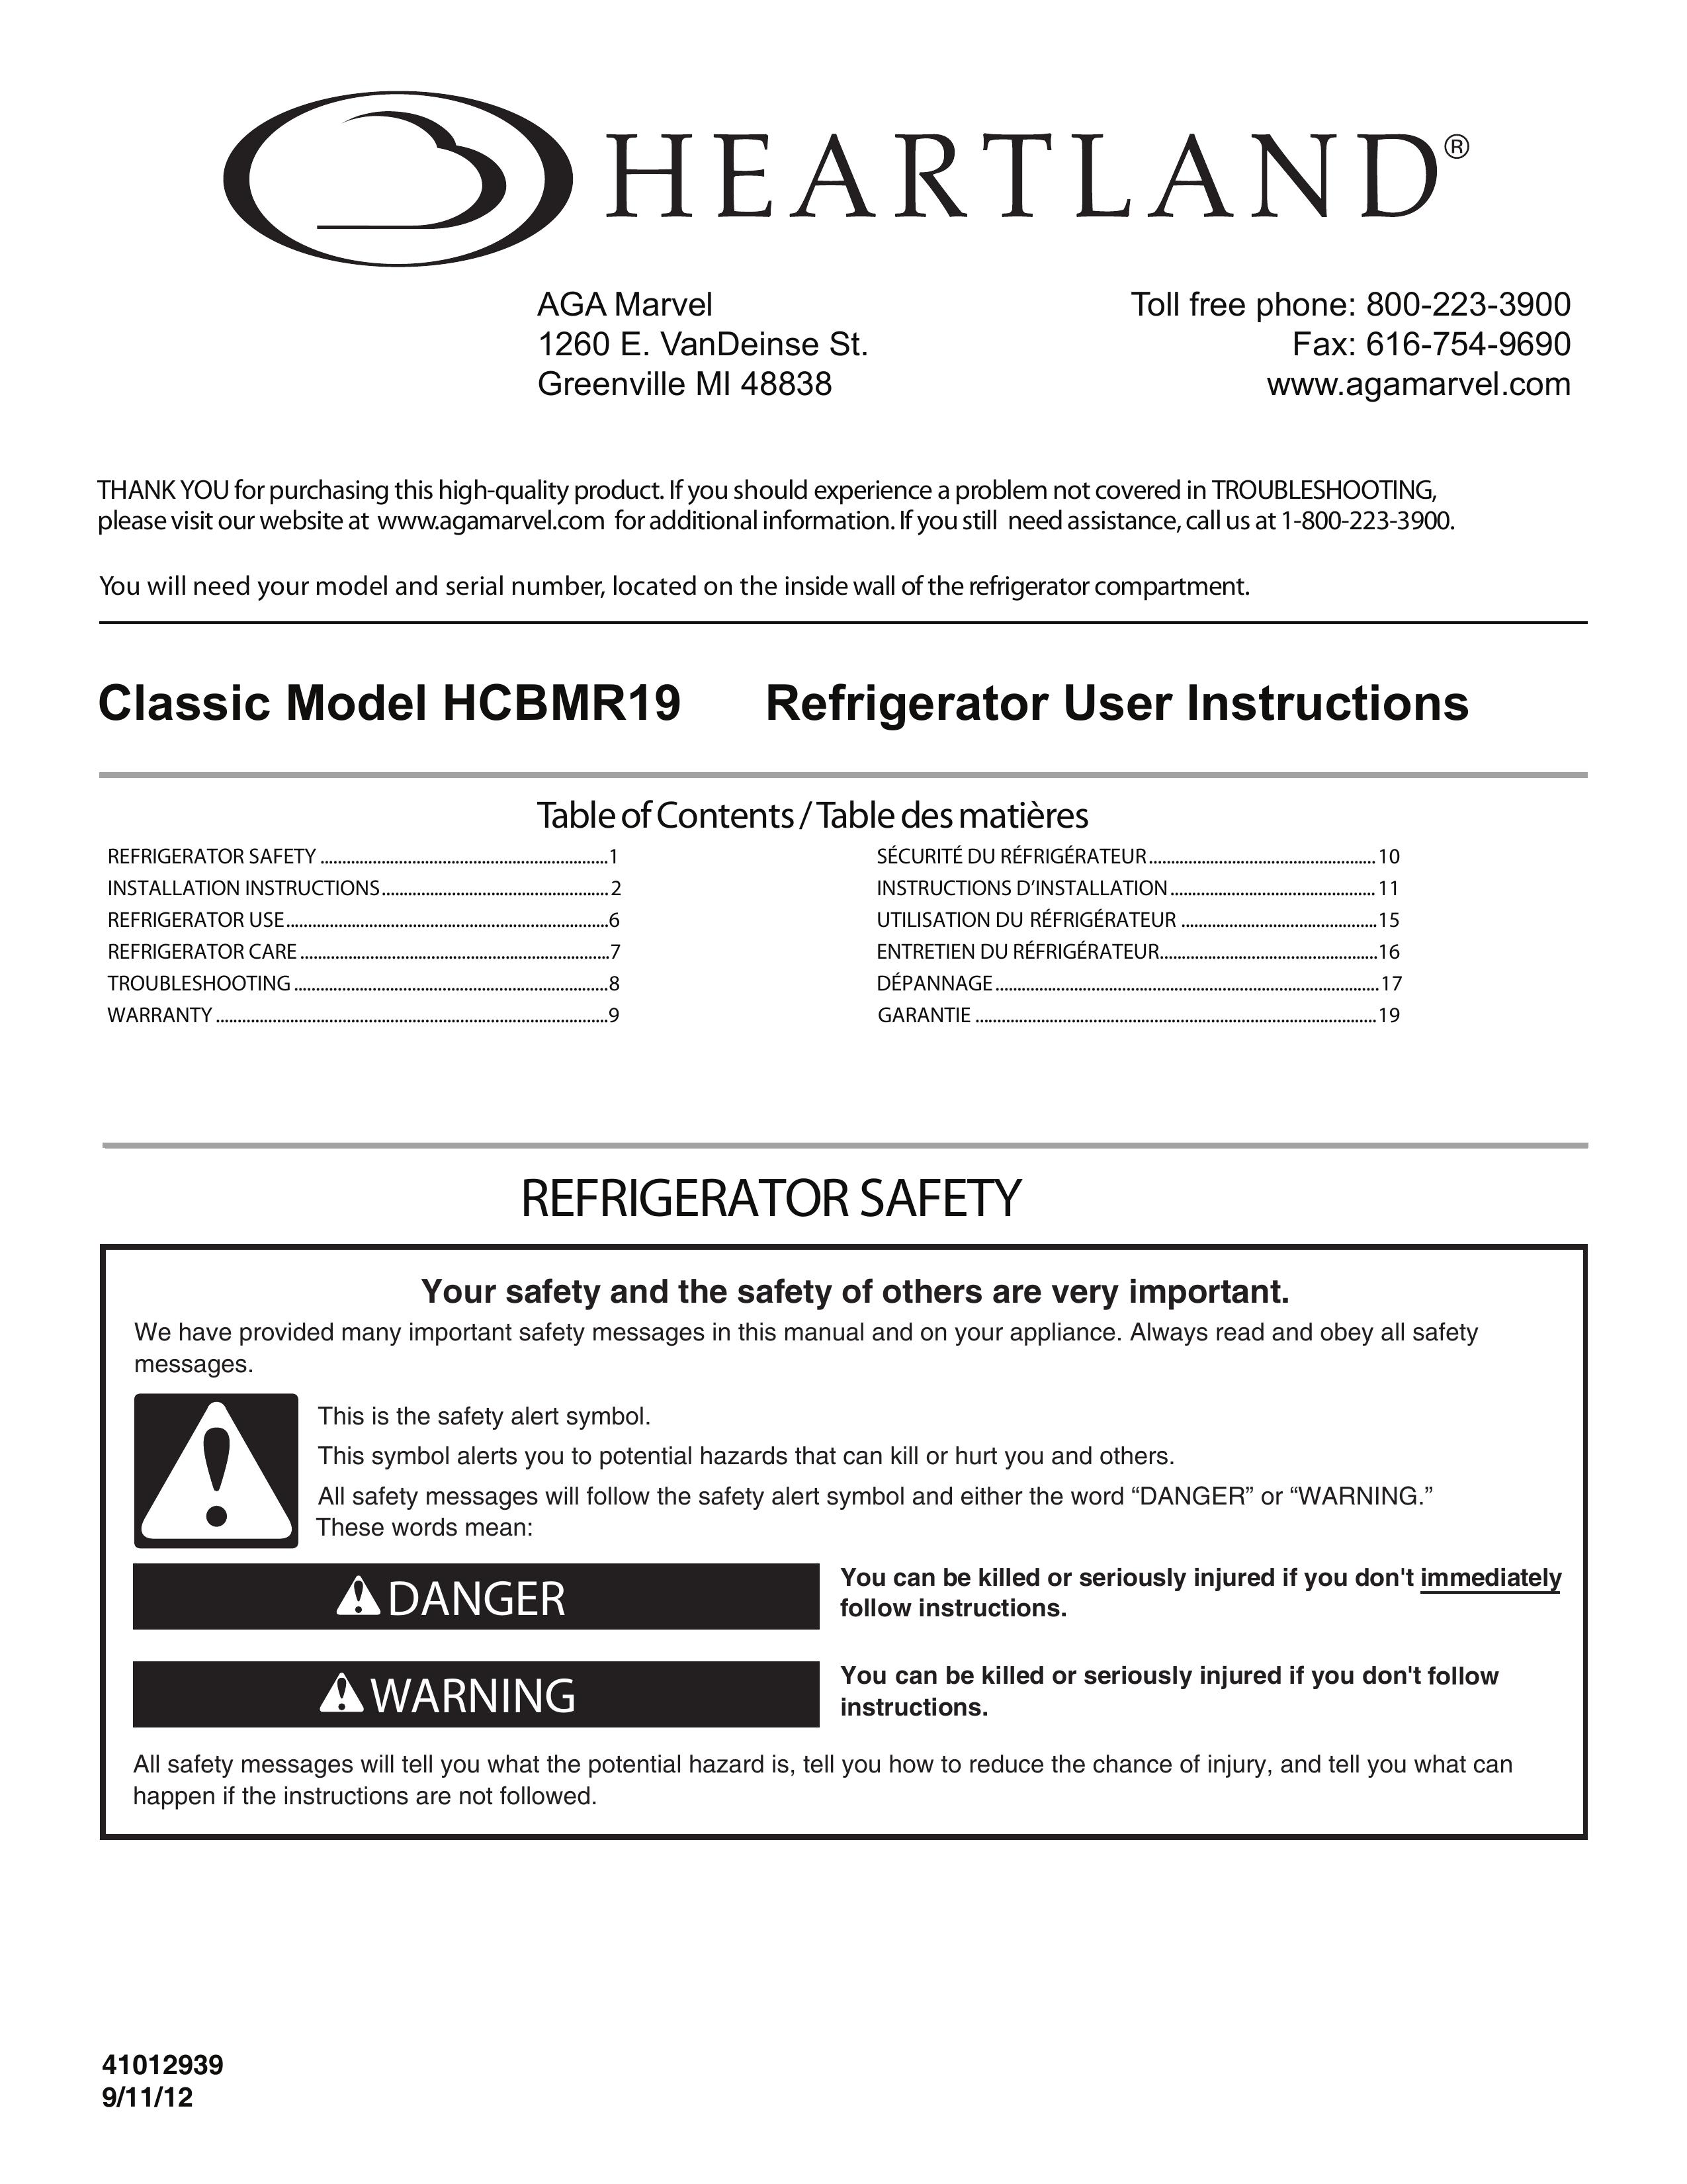 Heartland HCBMR19 Refrigerator User Manual